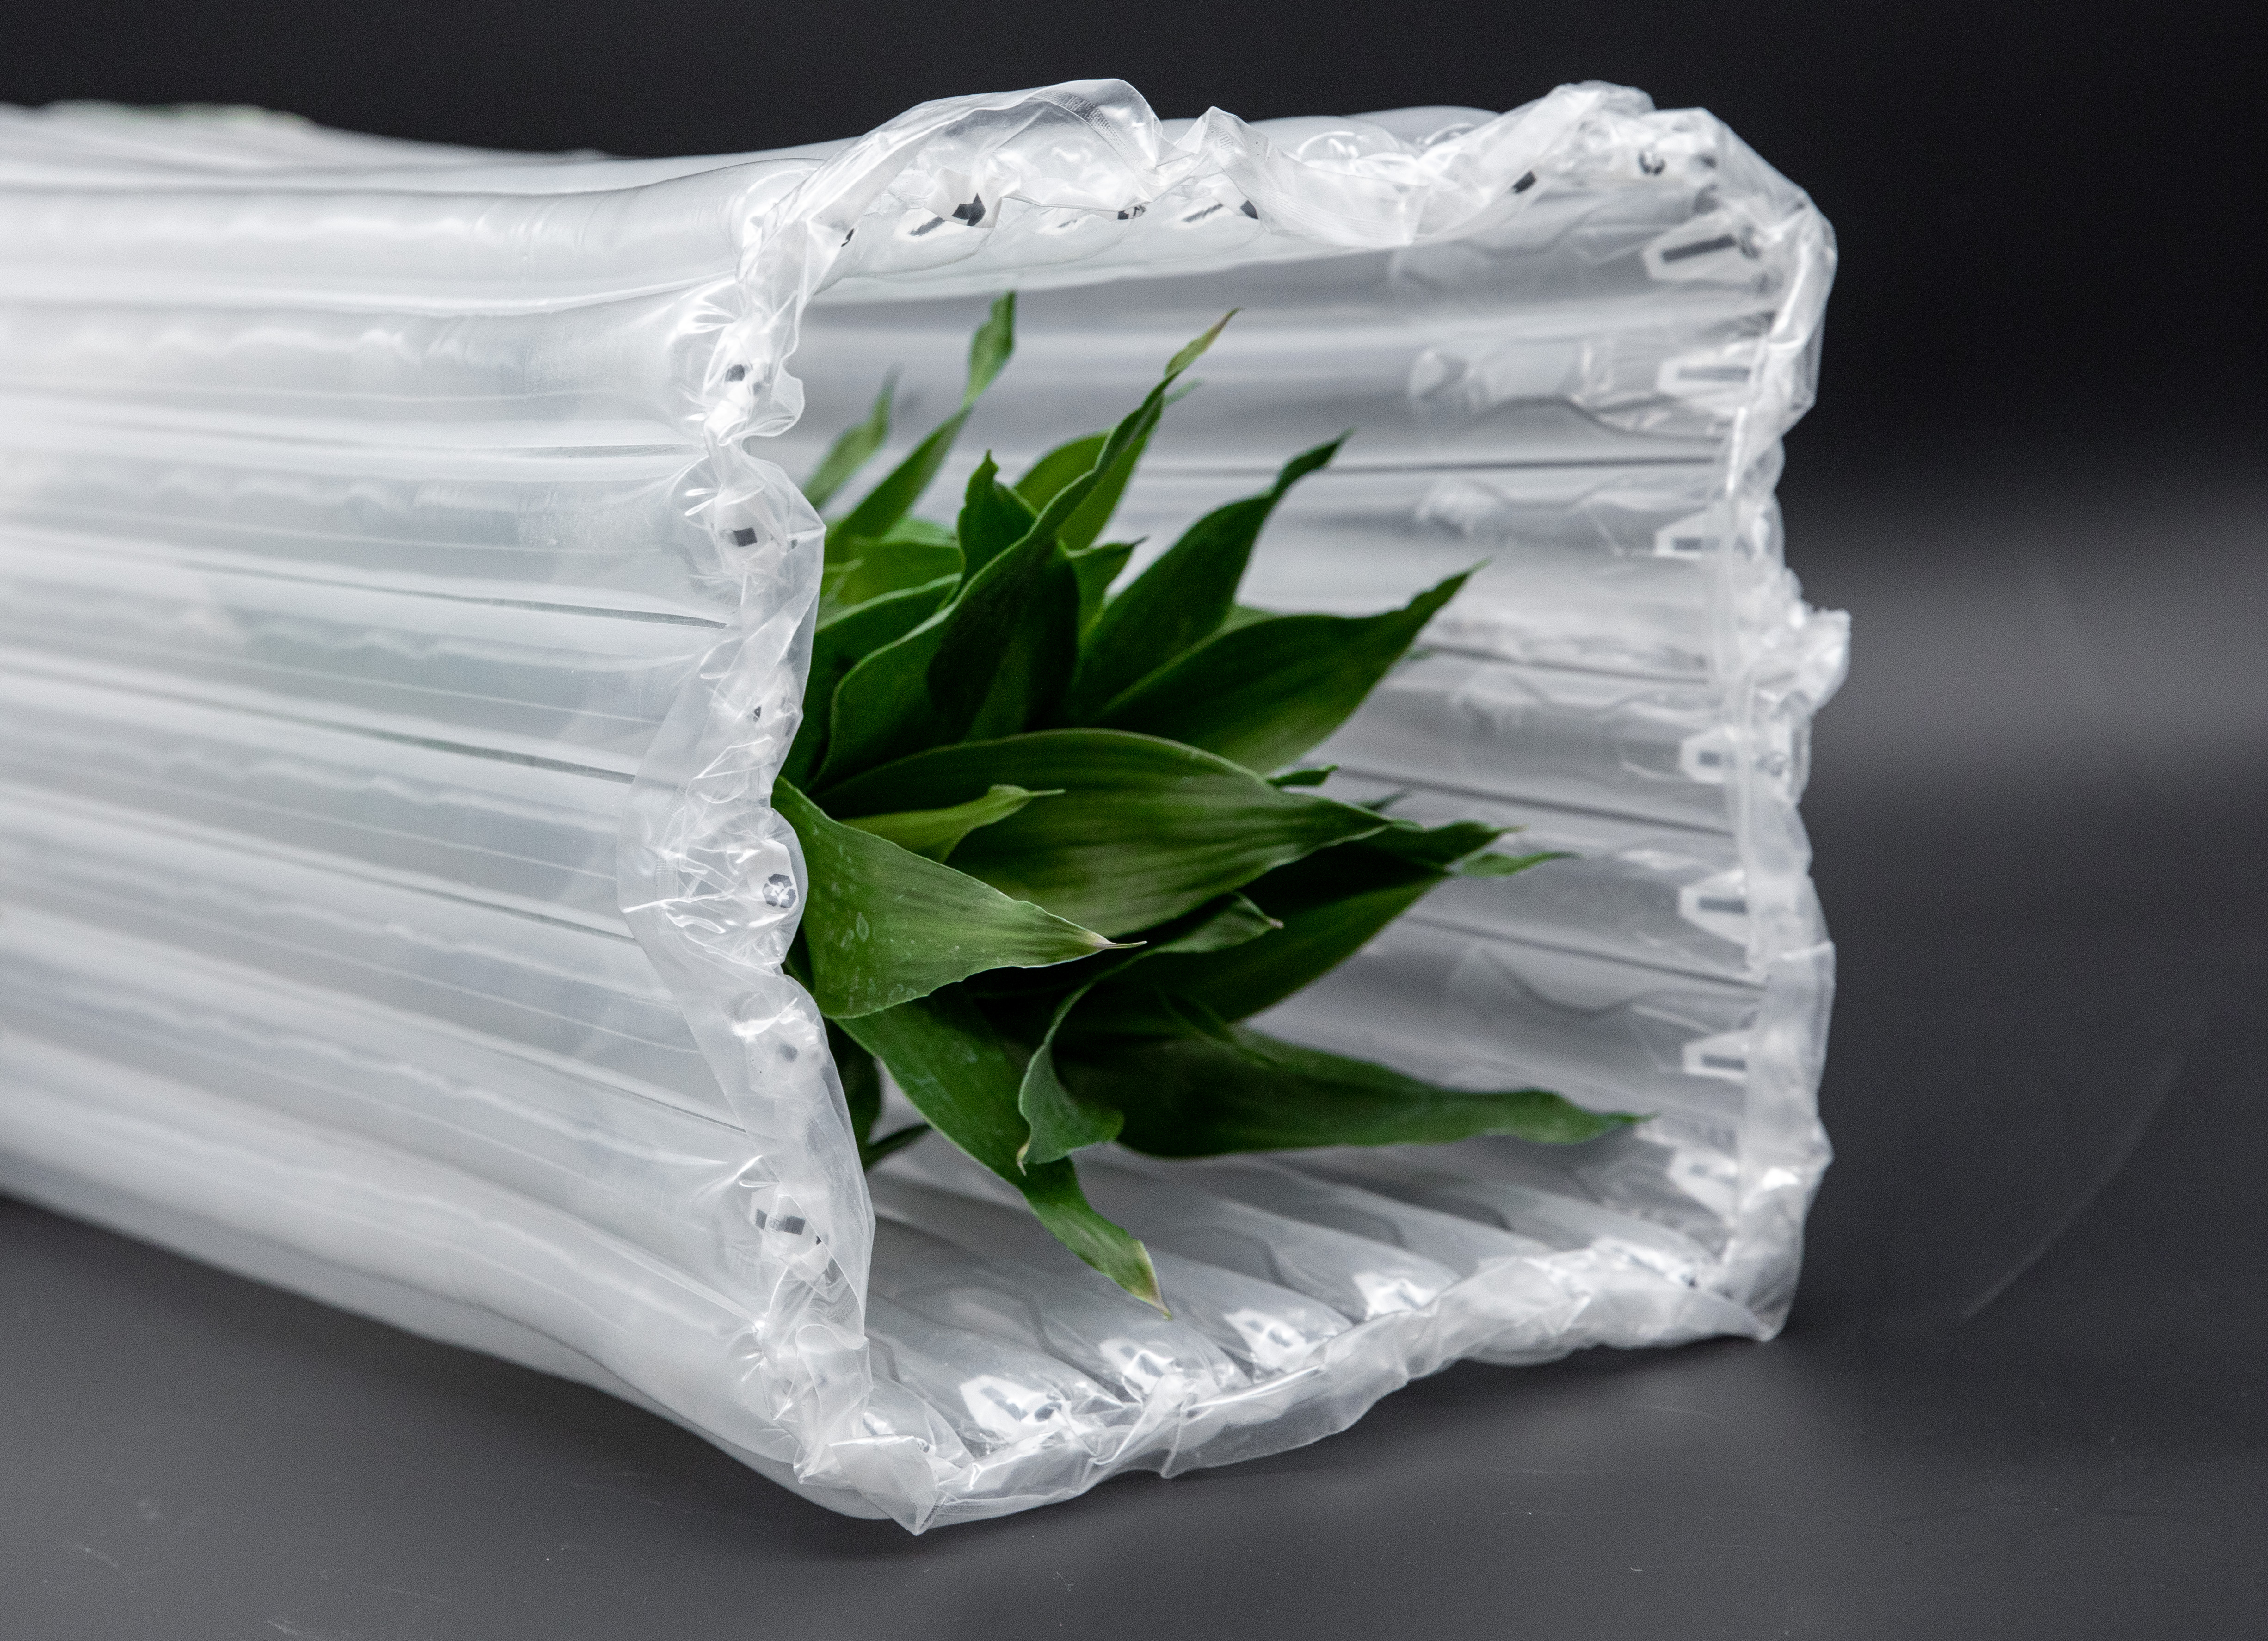 Tear Line Design Shock-Proof Air Bubble Wrap For Cosmetics